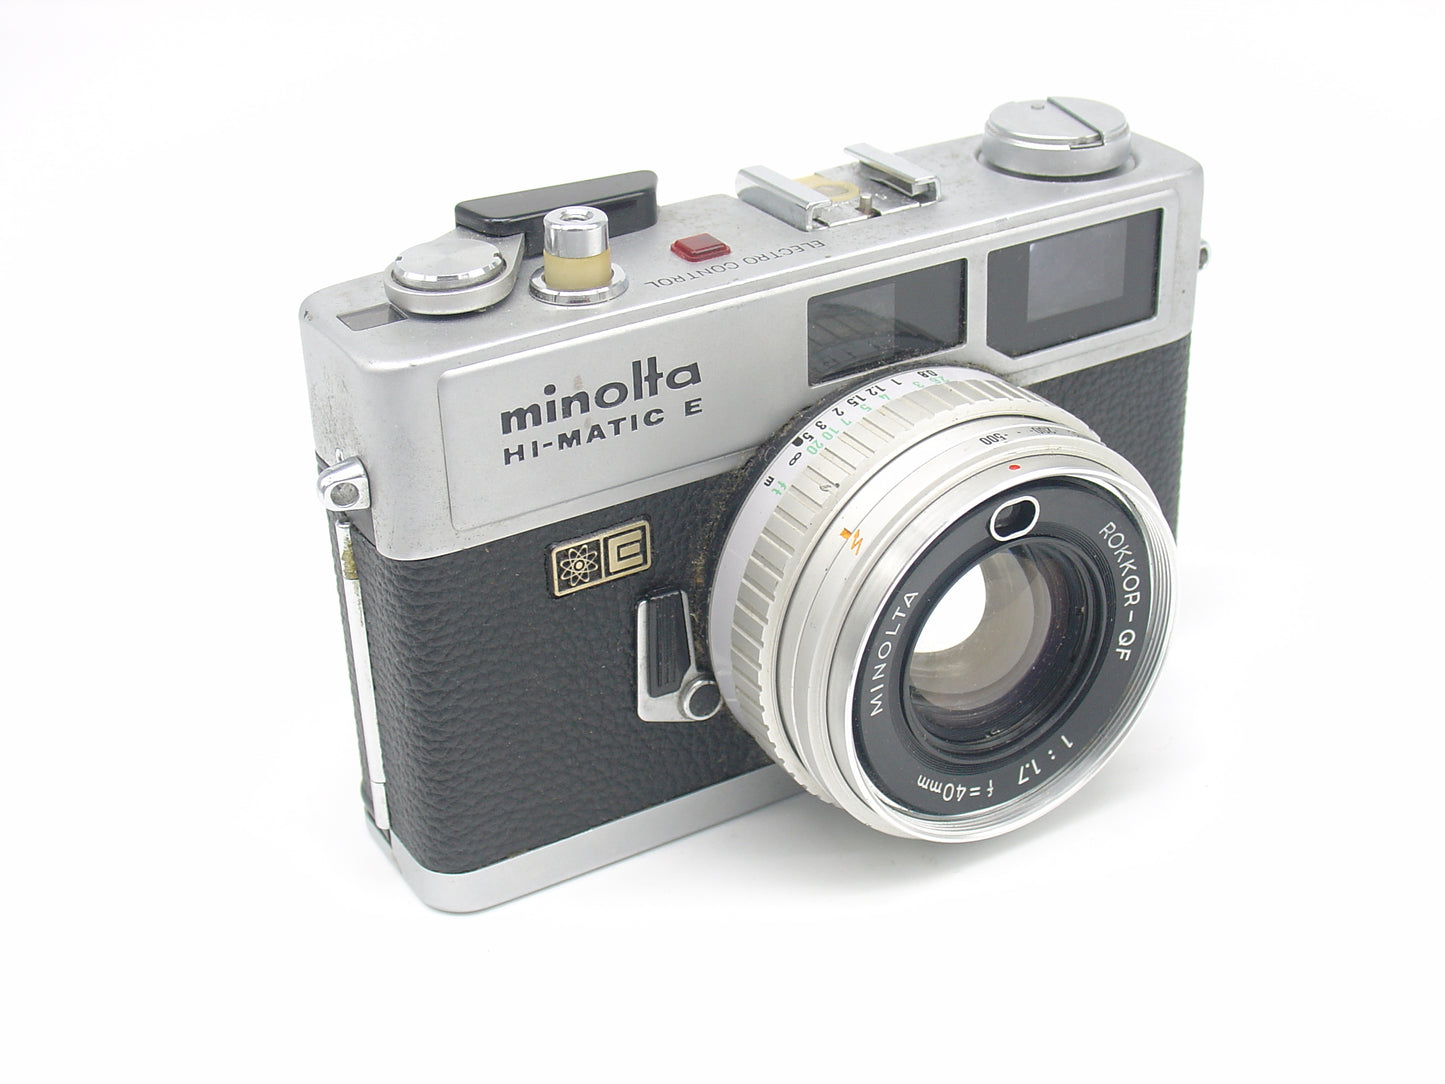 Minolta HiMatic E rangefinder camera kit